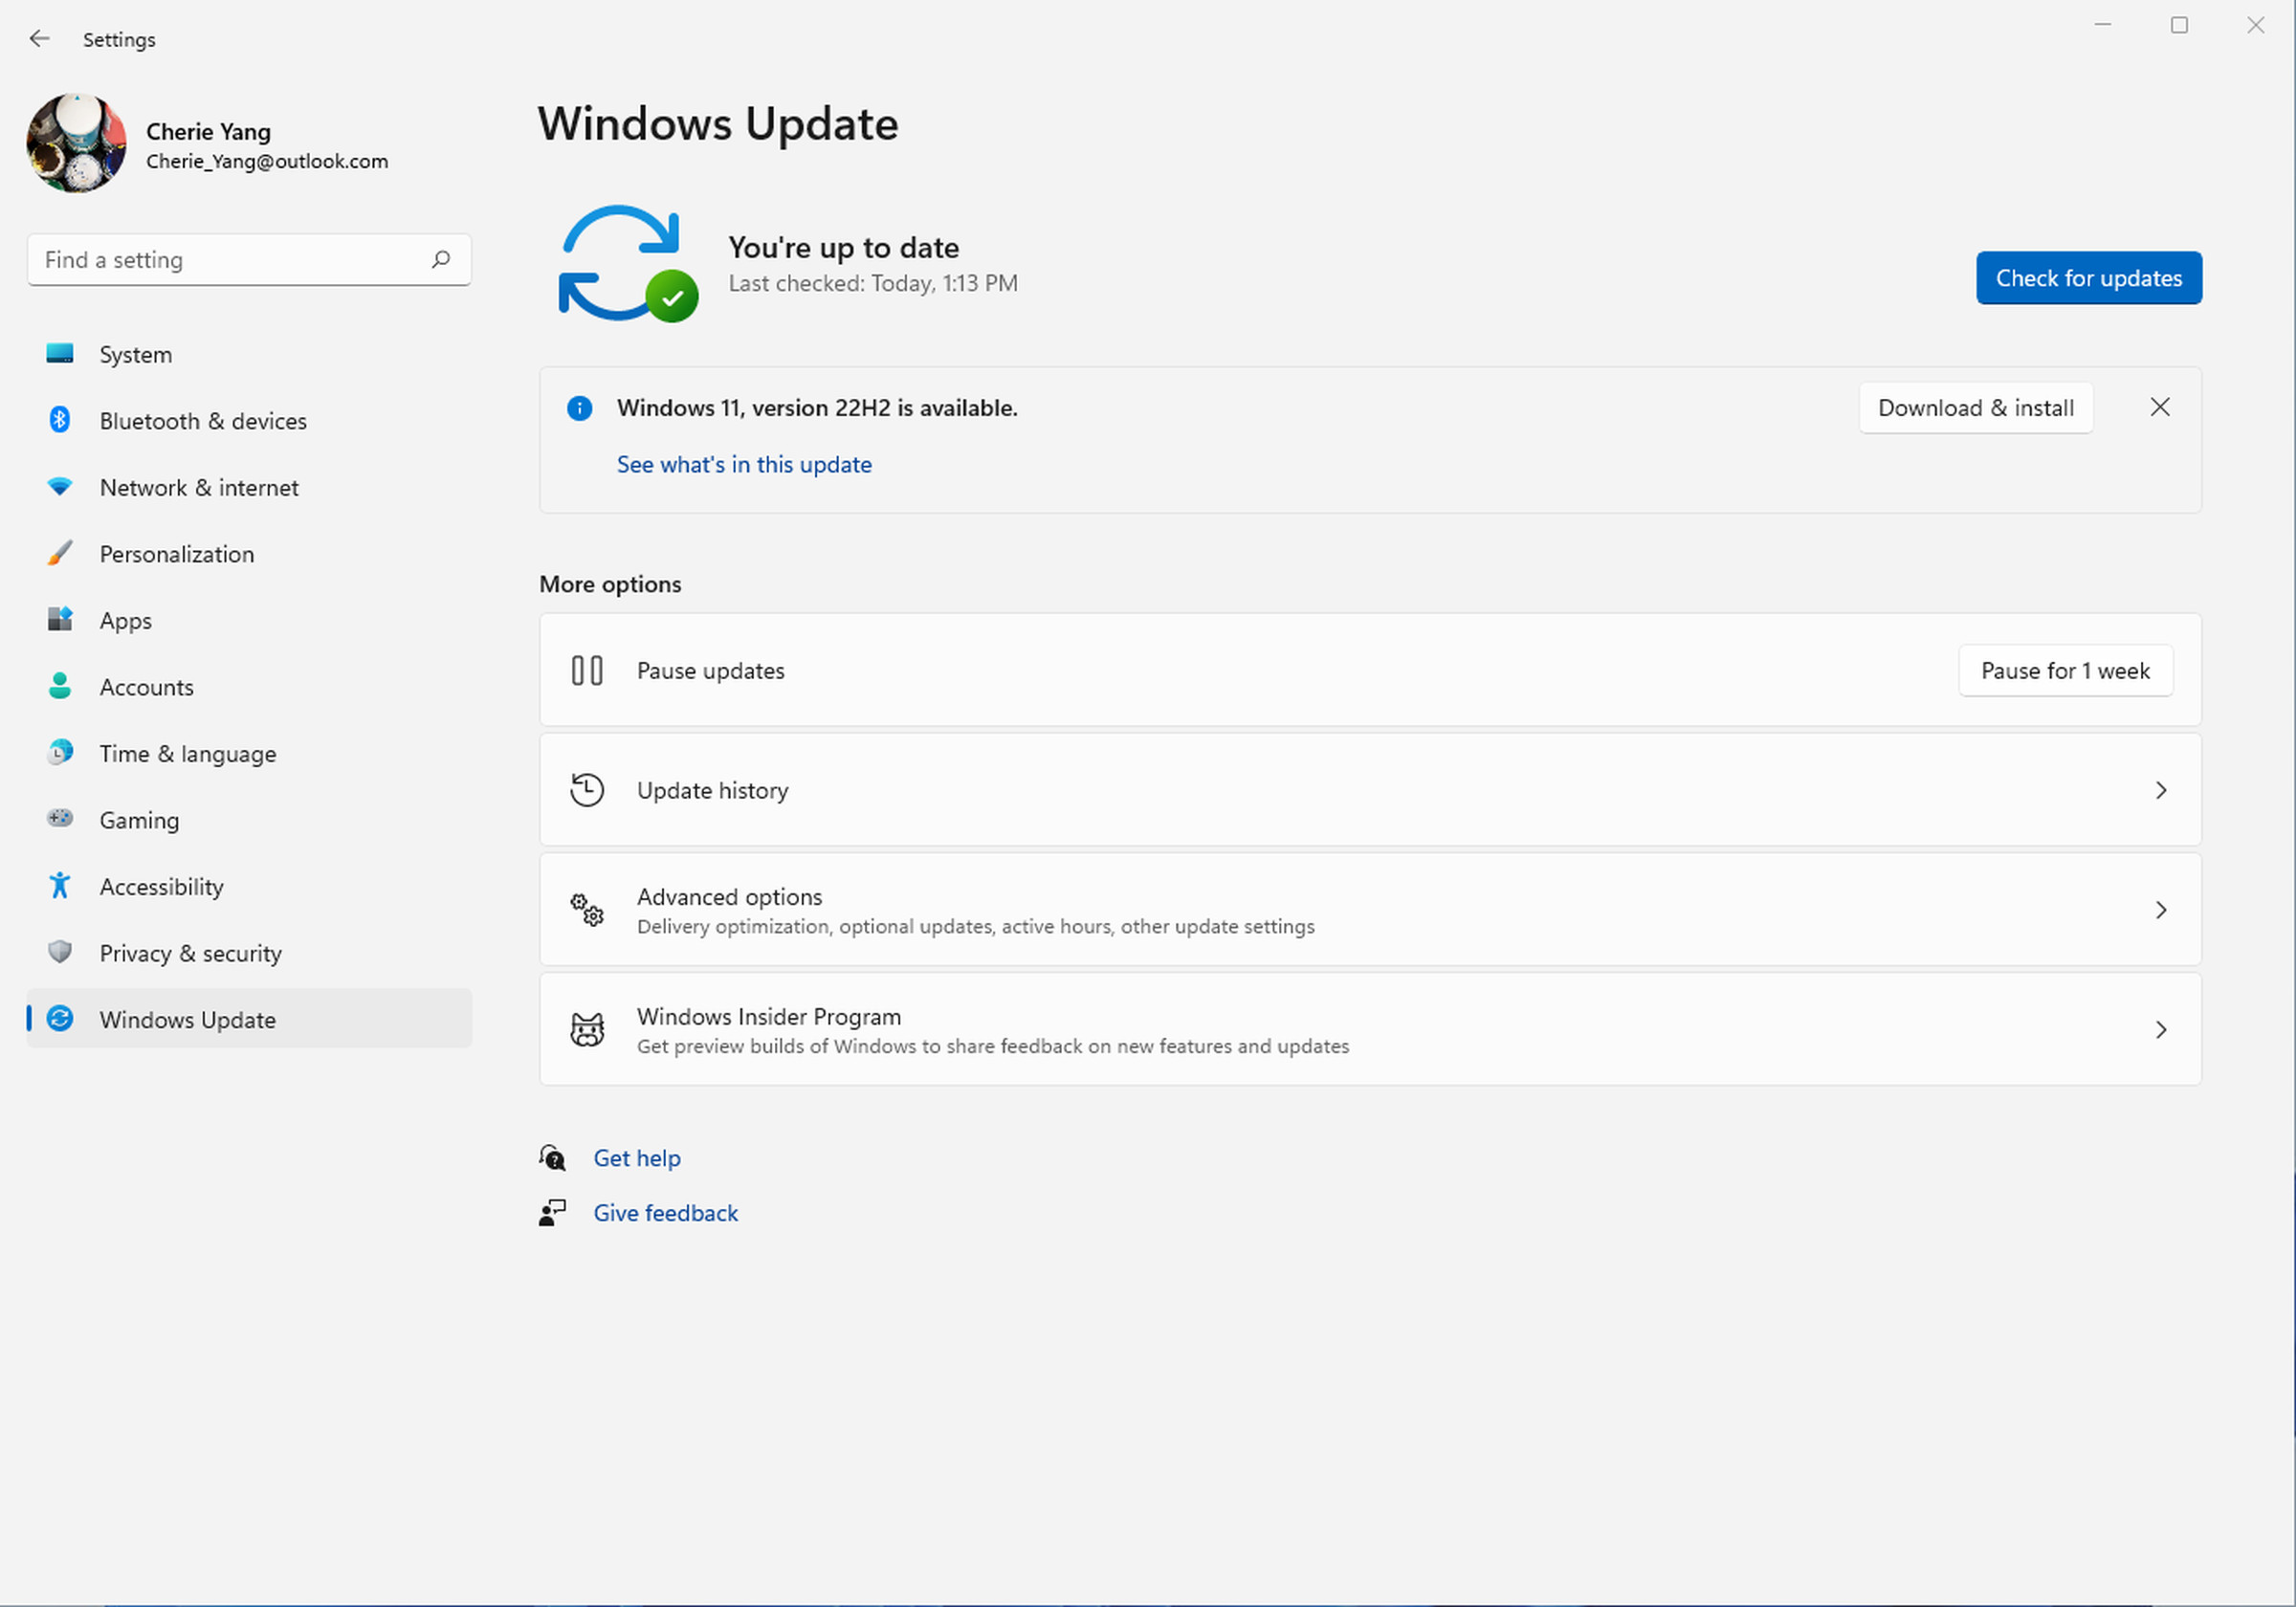 A screenshot of a Windows Update screen with a new update